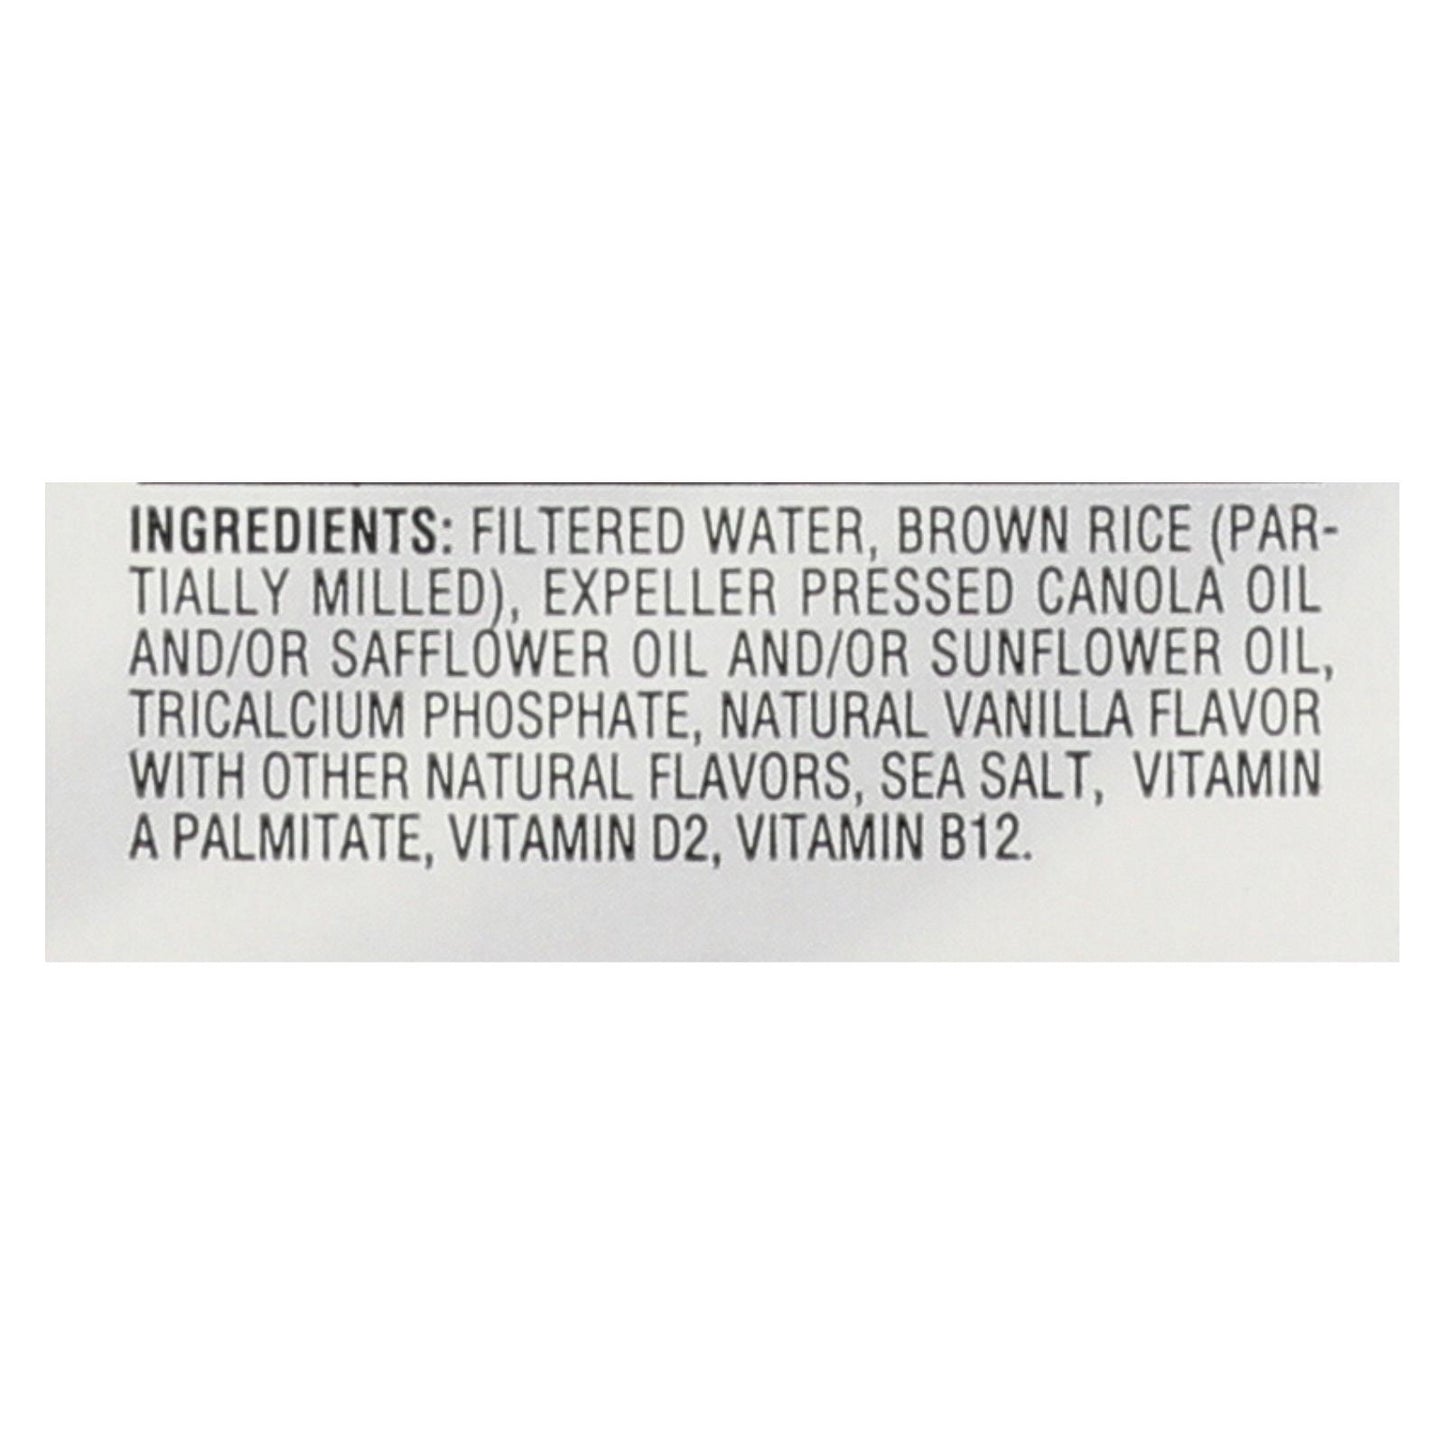 Rice Dream Original Rice Drink - Enriched Vanilla - Case Of 12 - 32 Fl Oz.